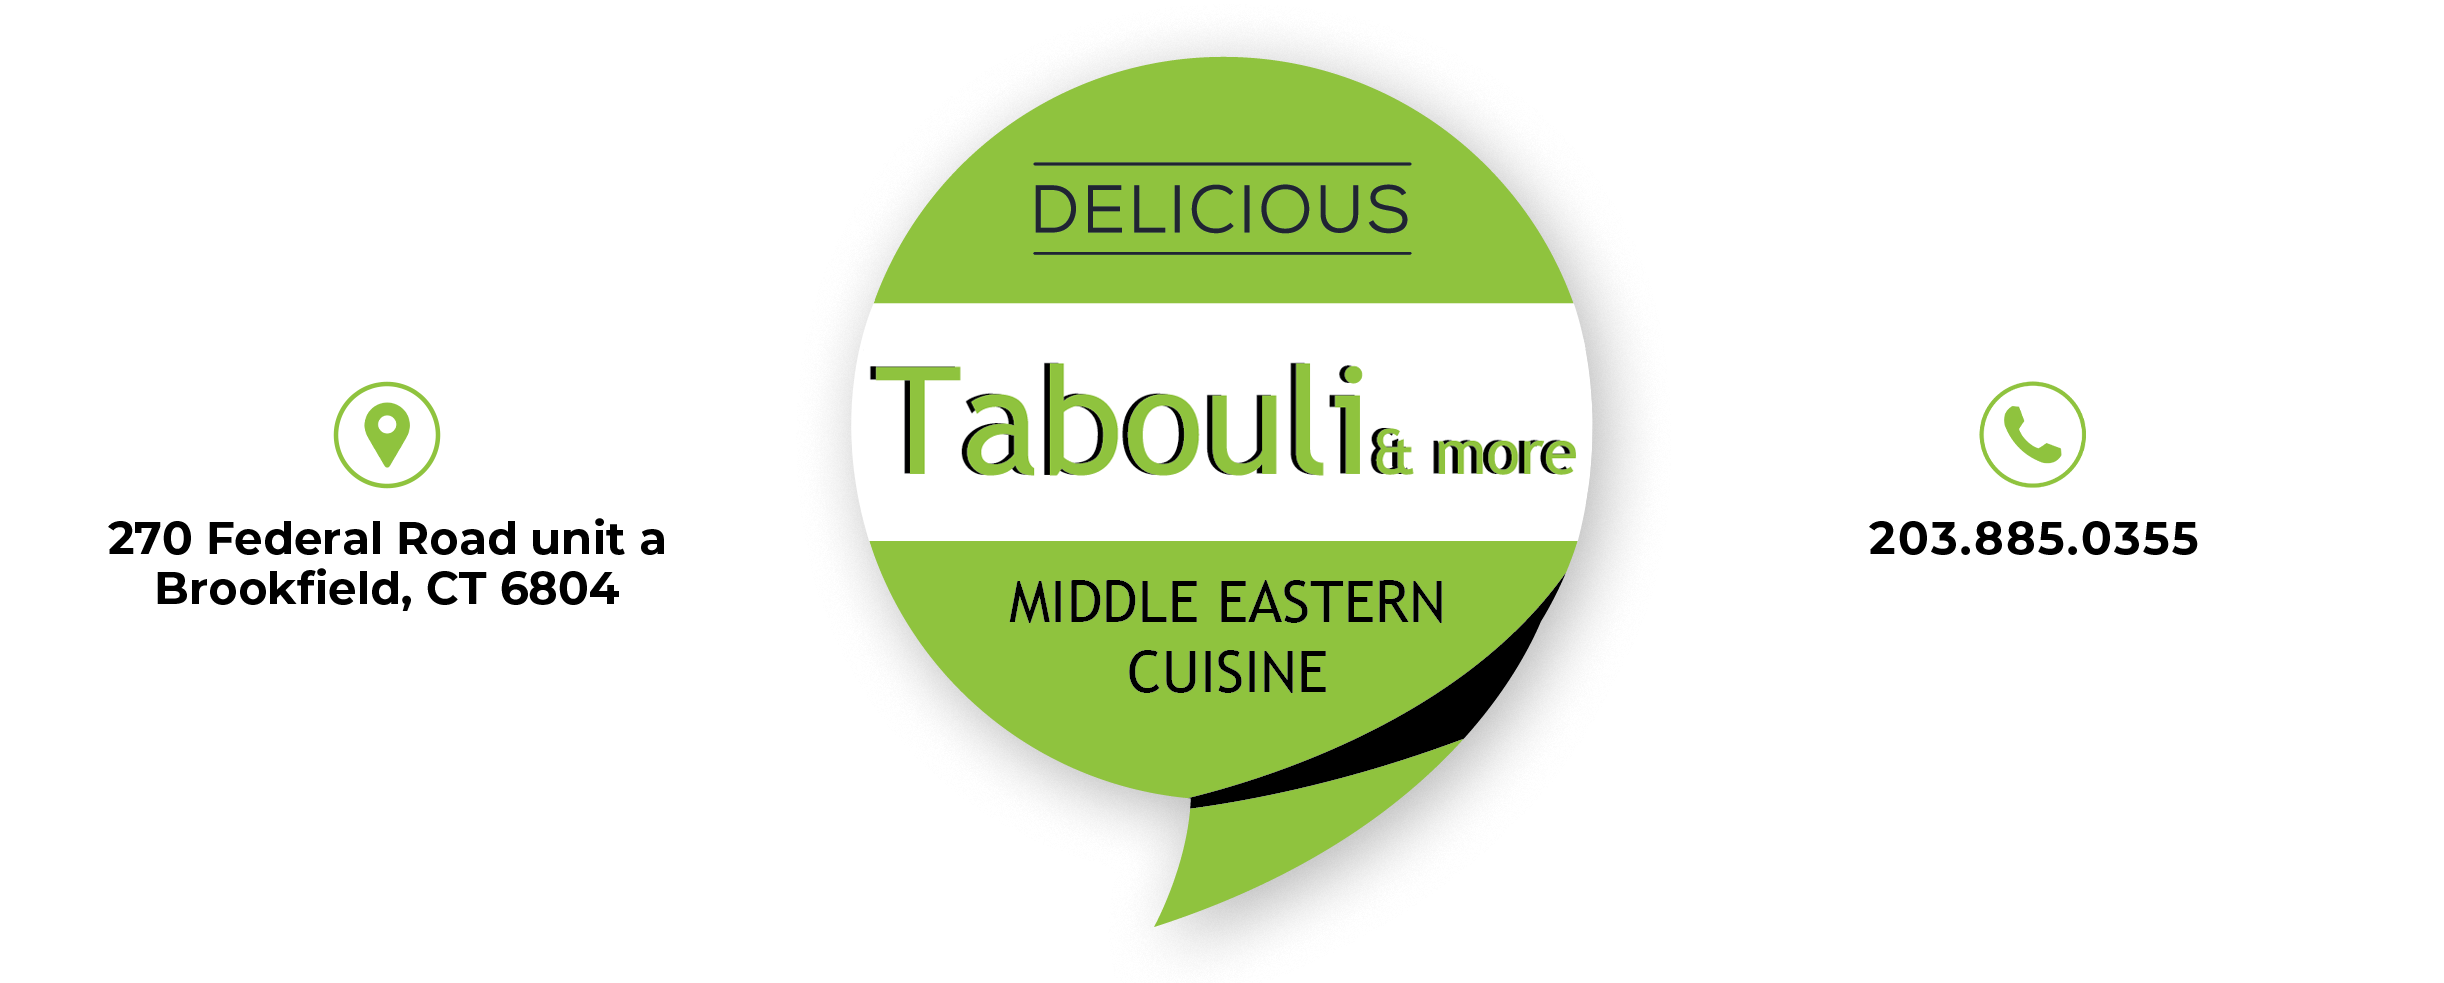 Tabouli & more